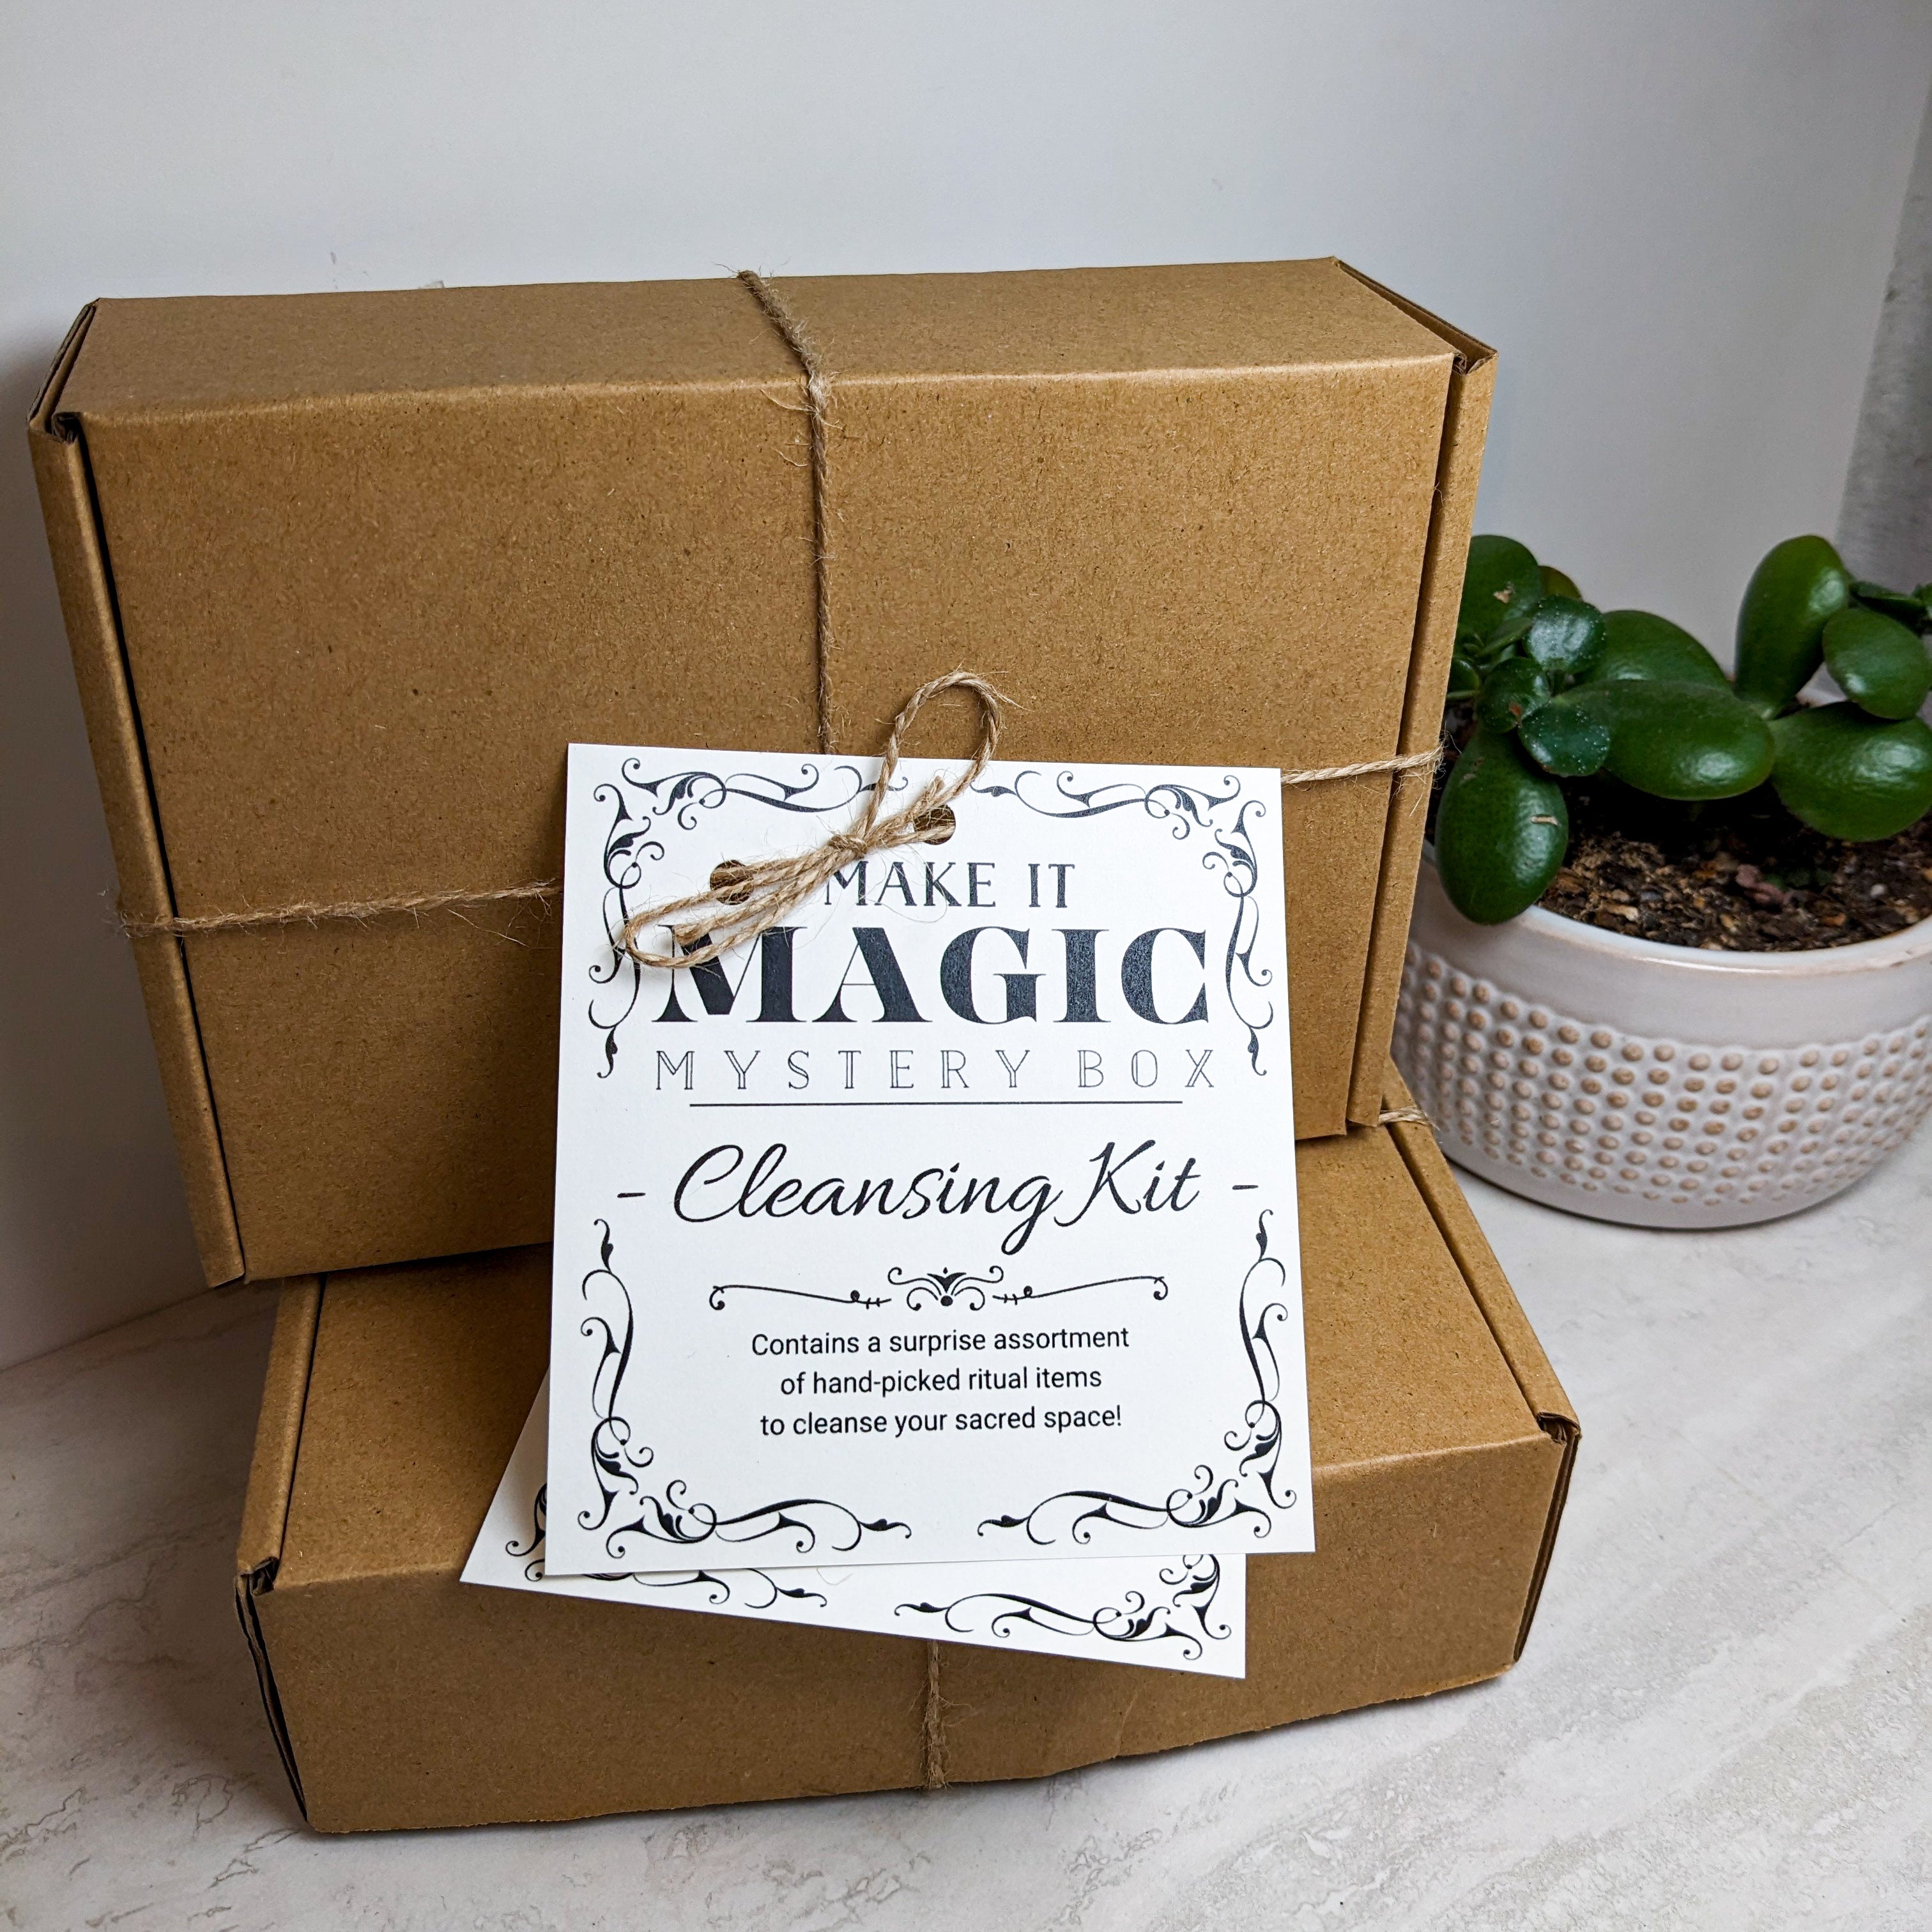 Make it Magic Mystery Box - Cleansing Kit